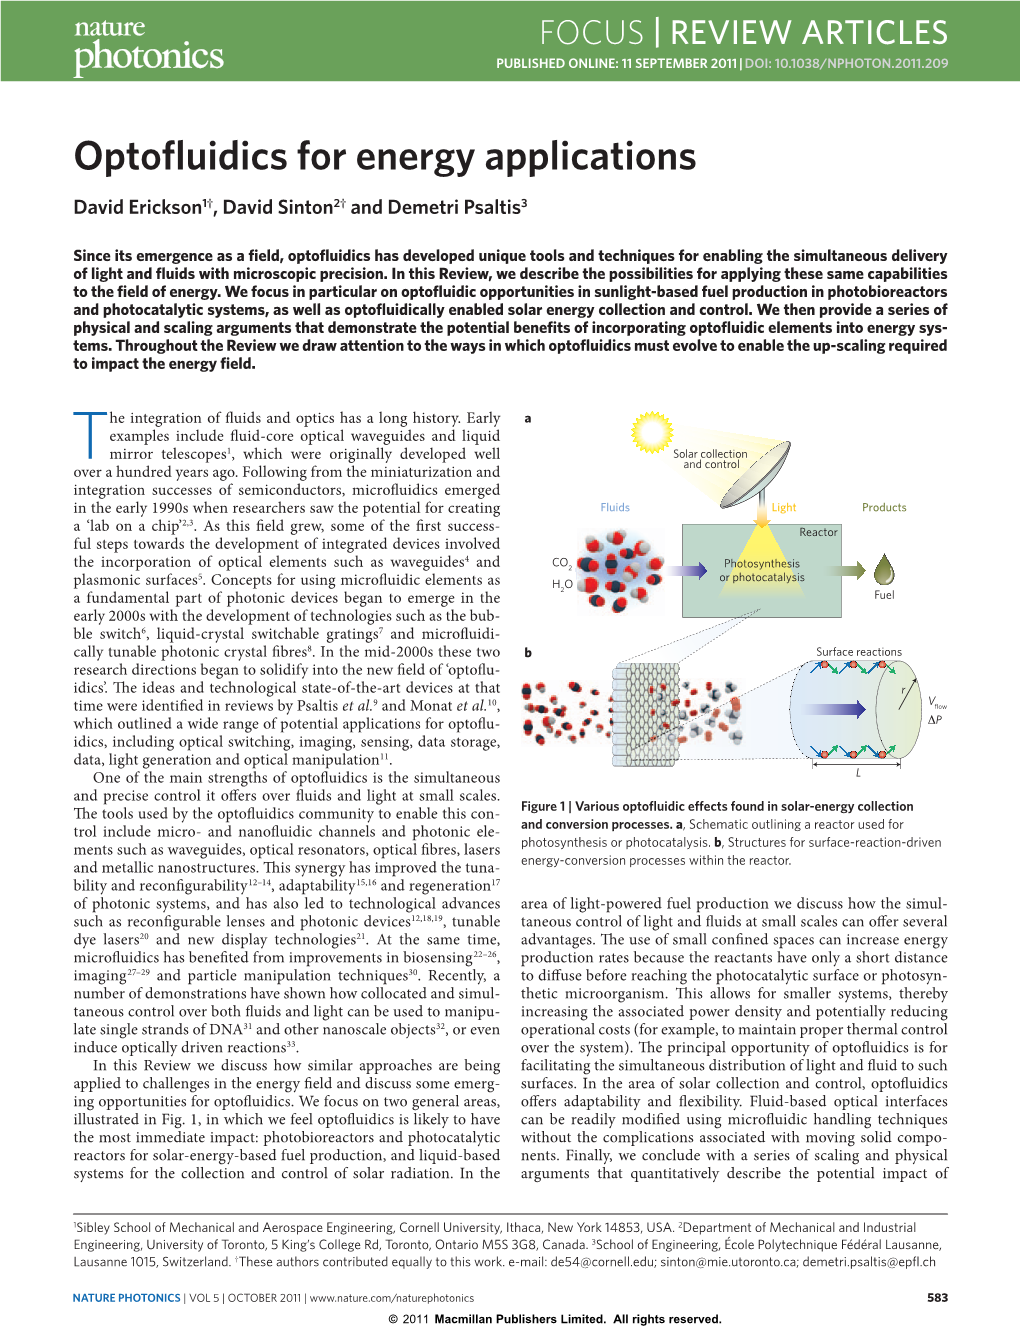 Optofluidics for Energy Applications David Erickson1†, David Sinton2† and Demetri Psaltis3